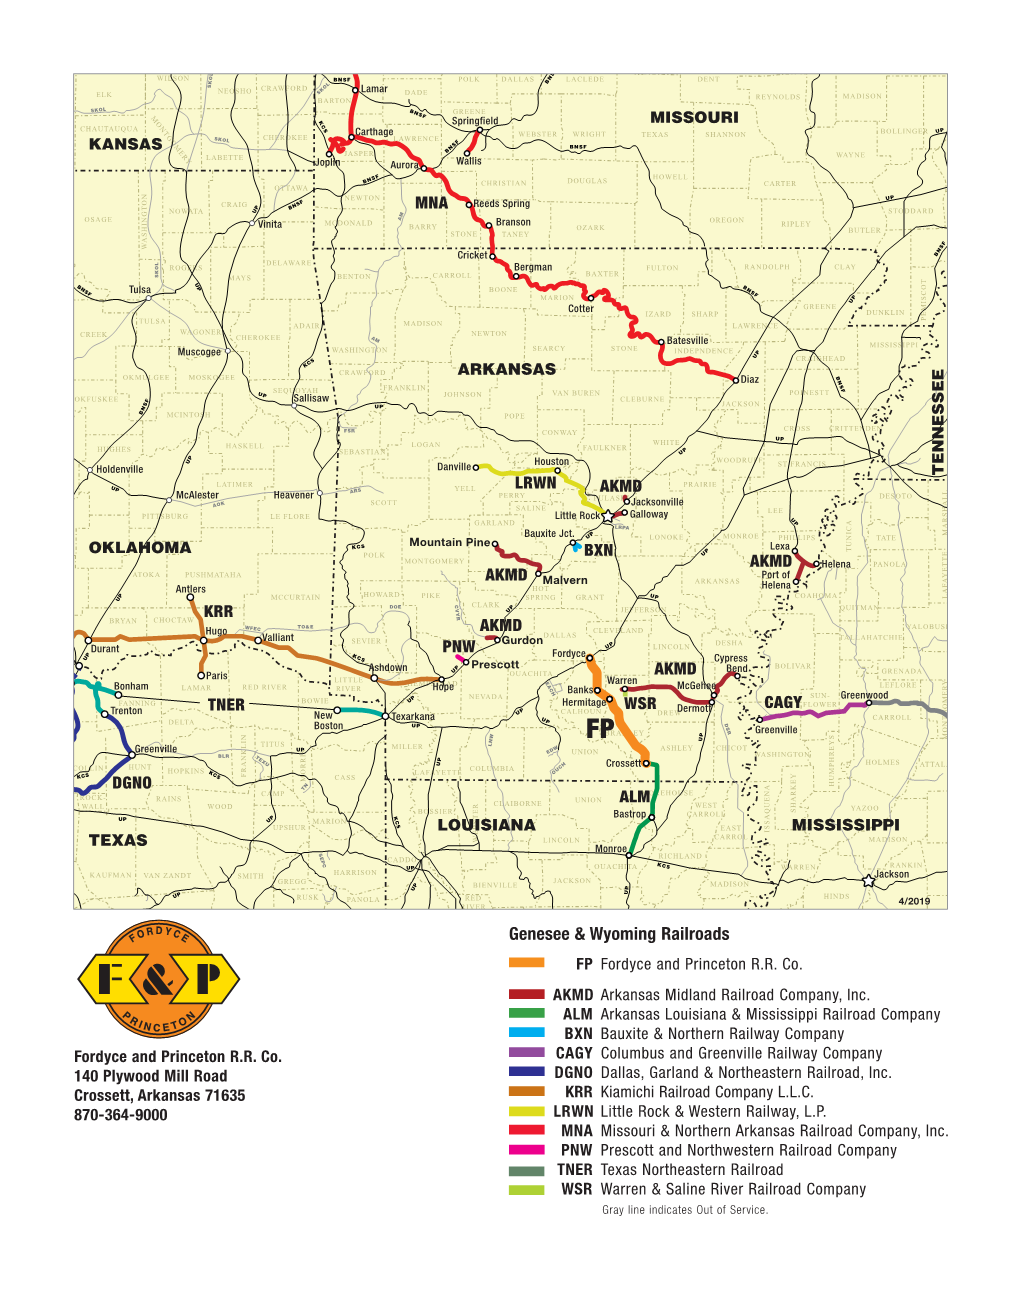 Genesee & Wyoming Railroads